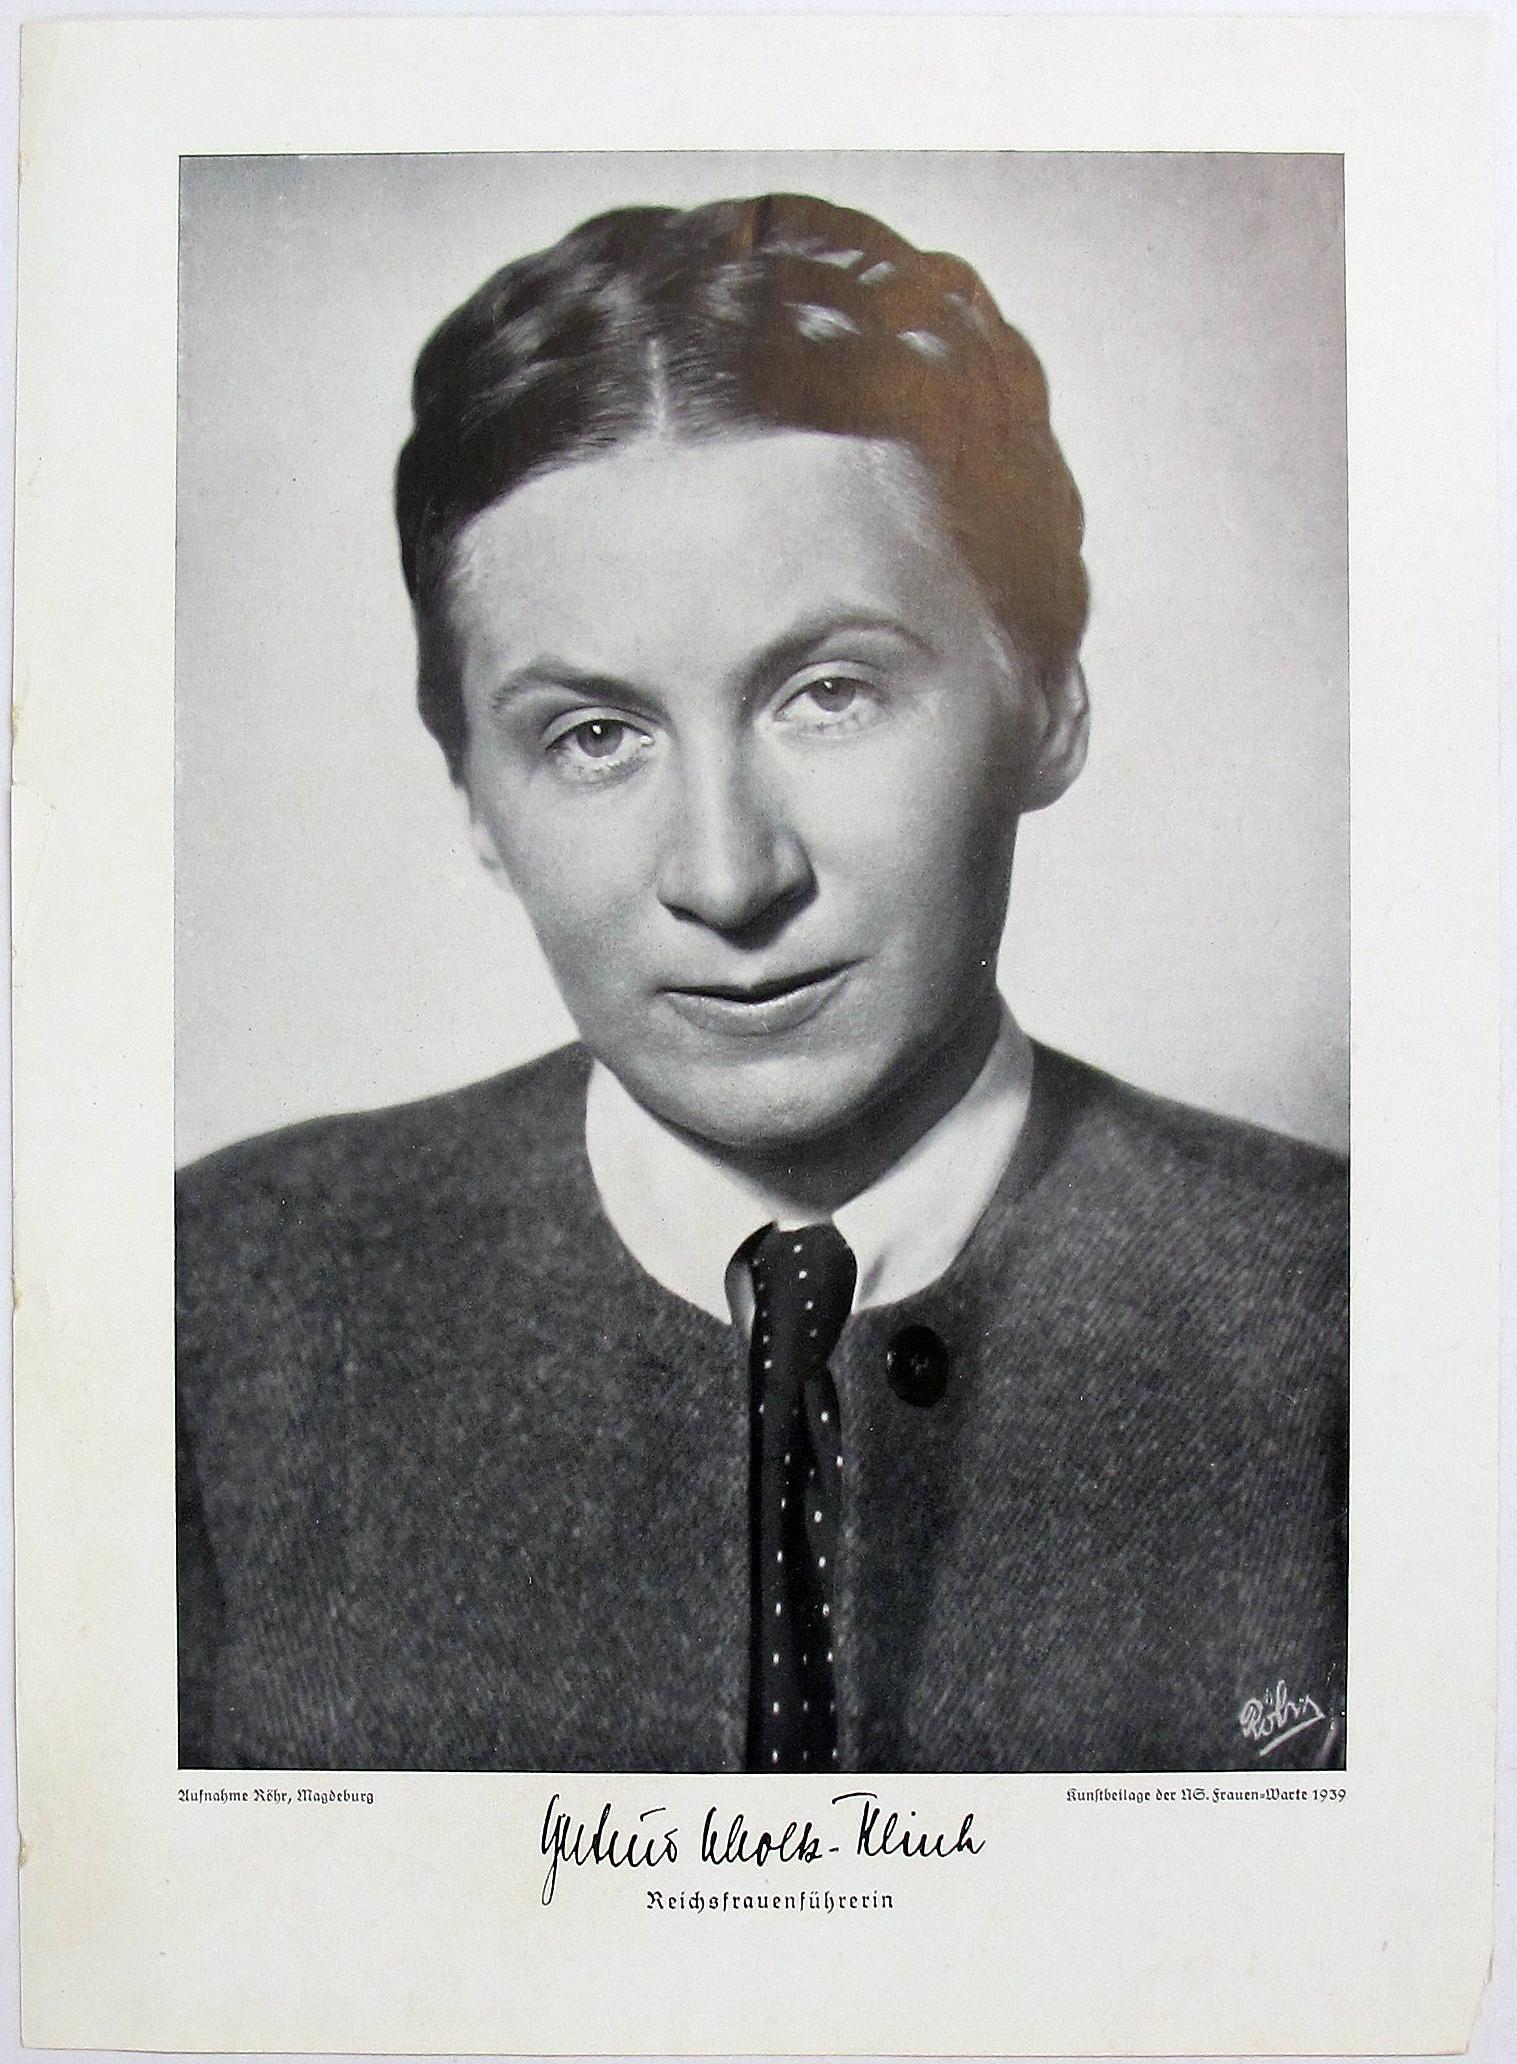 [Gertrud Scholtz-Klink, 1939]